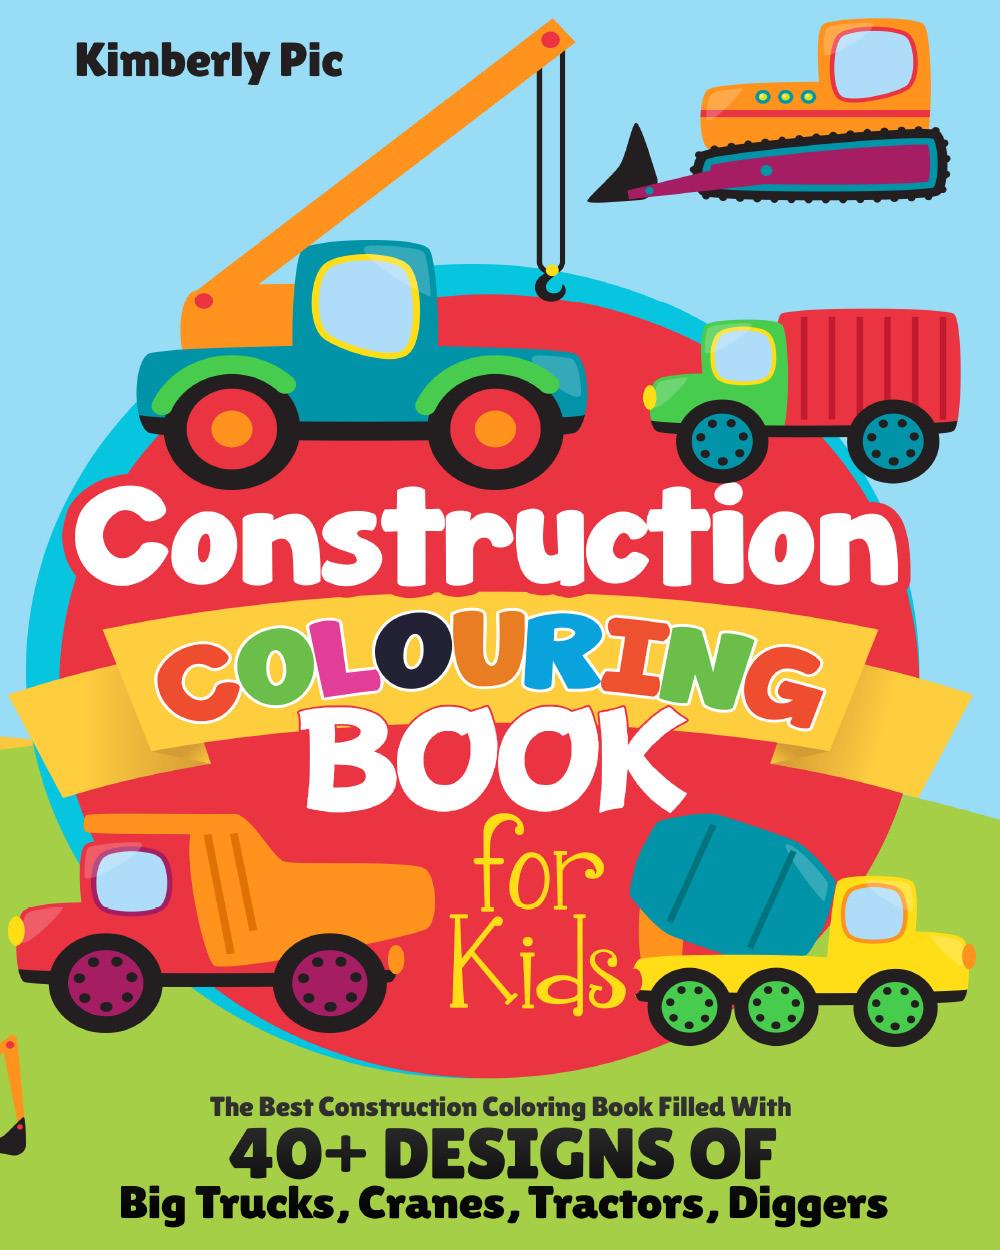 Construction Coloring Book for Kids. The Best Construction Coloring Book Filled With 40+ Designs of Big Trucks, Cranes, Tractors, Diggers